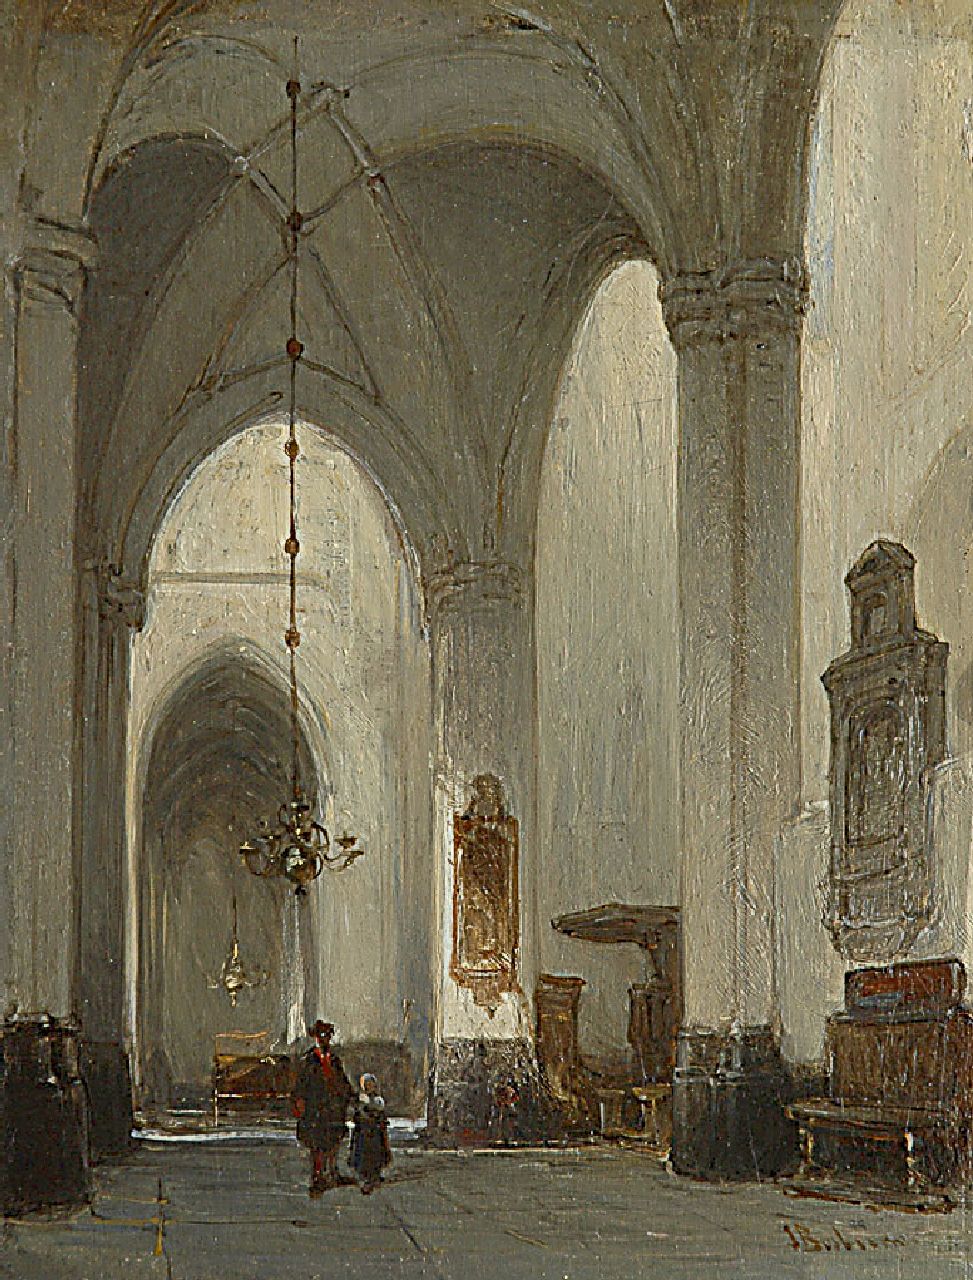 Bosboom J.  | Johannes Bosboom, Interieur van de Grote Kerk te Breda, olieverf op paneel 20,8 x 16,0 cm, gesigneerd rechtsonder